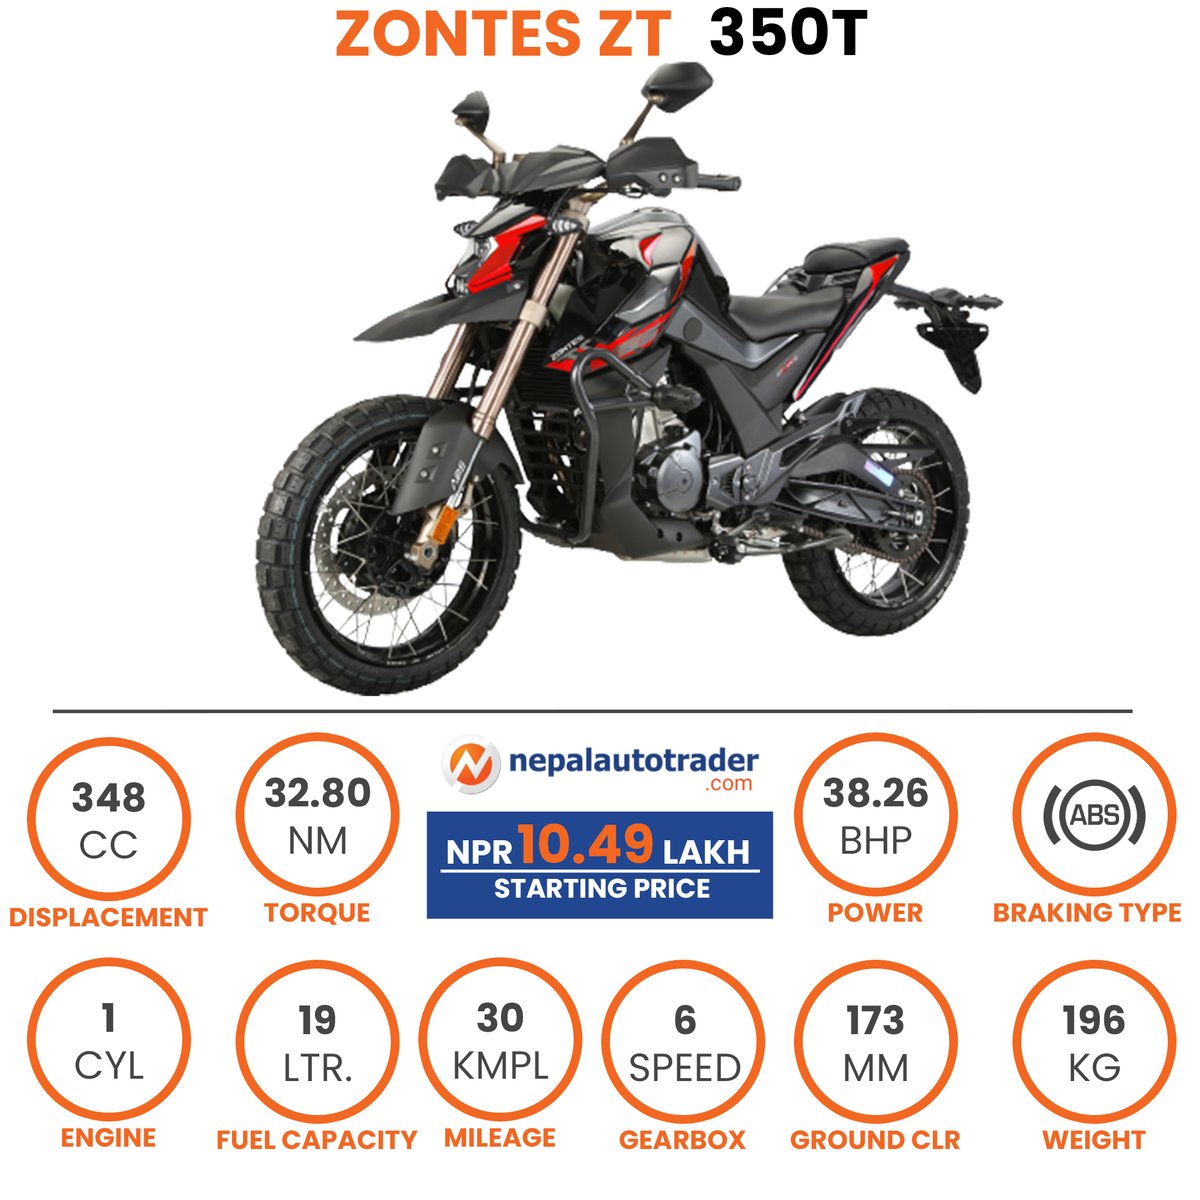 Zontes ZT 350T Adventure Motorbike Quick Specifications. Autonews #AutonewsNepal #Bikes #BikesNepal #AdventureMotorbike #ZontesBikes #ZontesNepal #ZontesZT350T #NepalAutoTrader